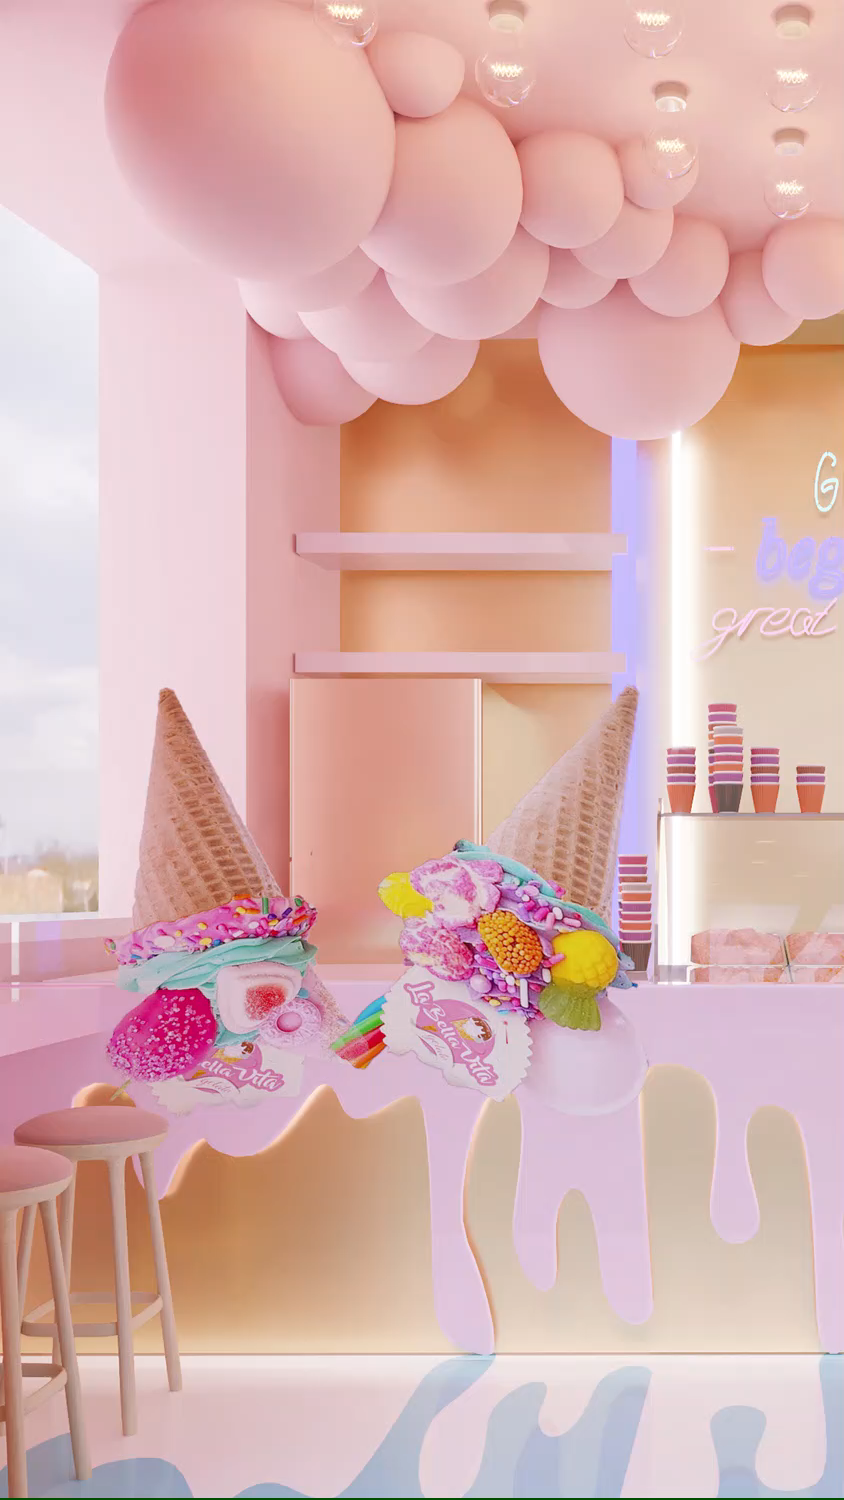 Cute ice cream shop  interior design & decorating ideas with amazing fun decor -   19 beauty Design salon ideas